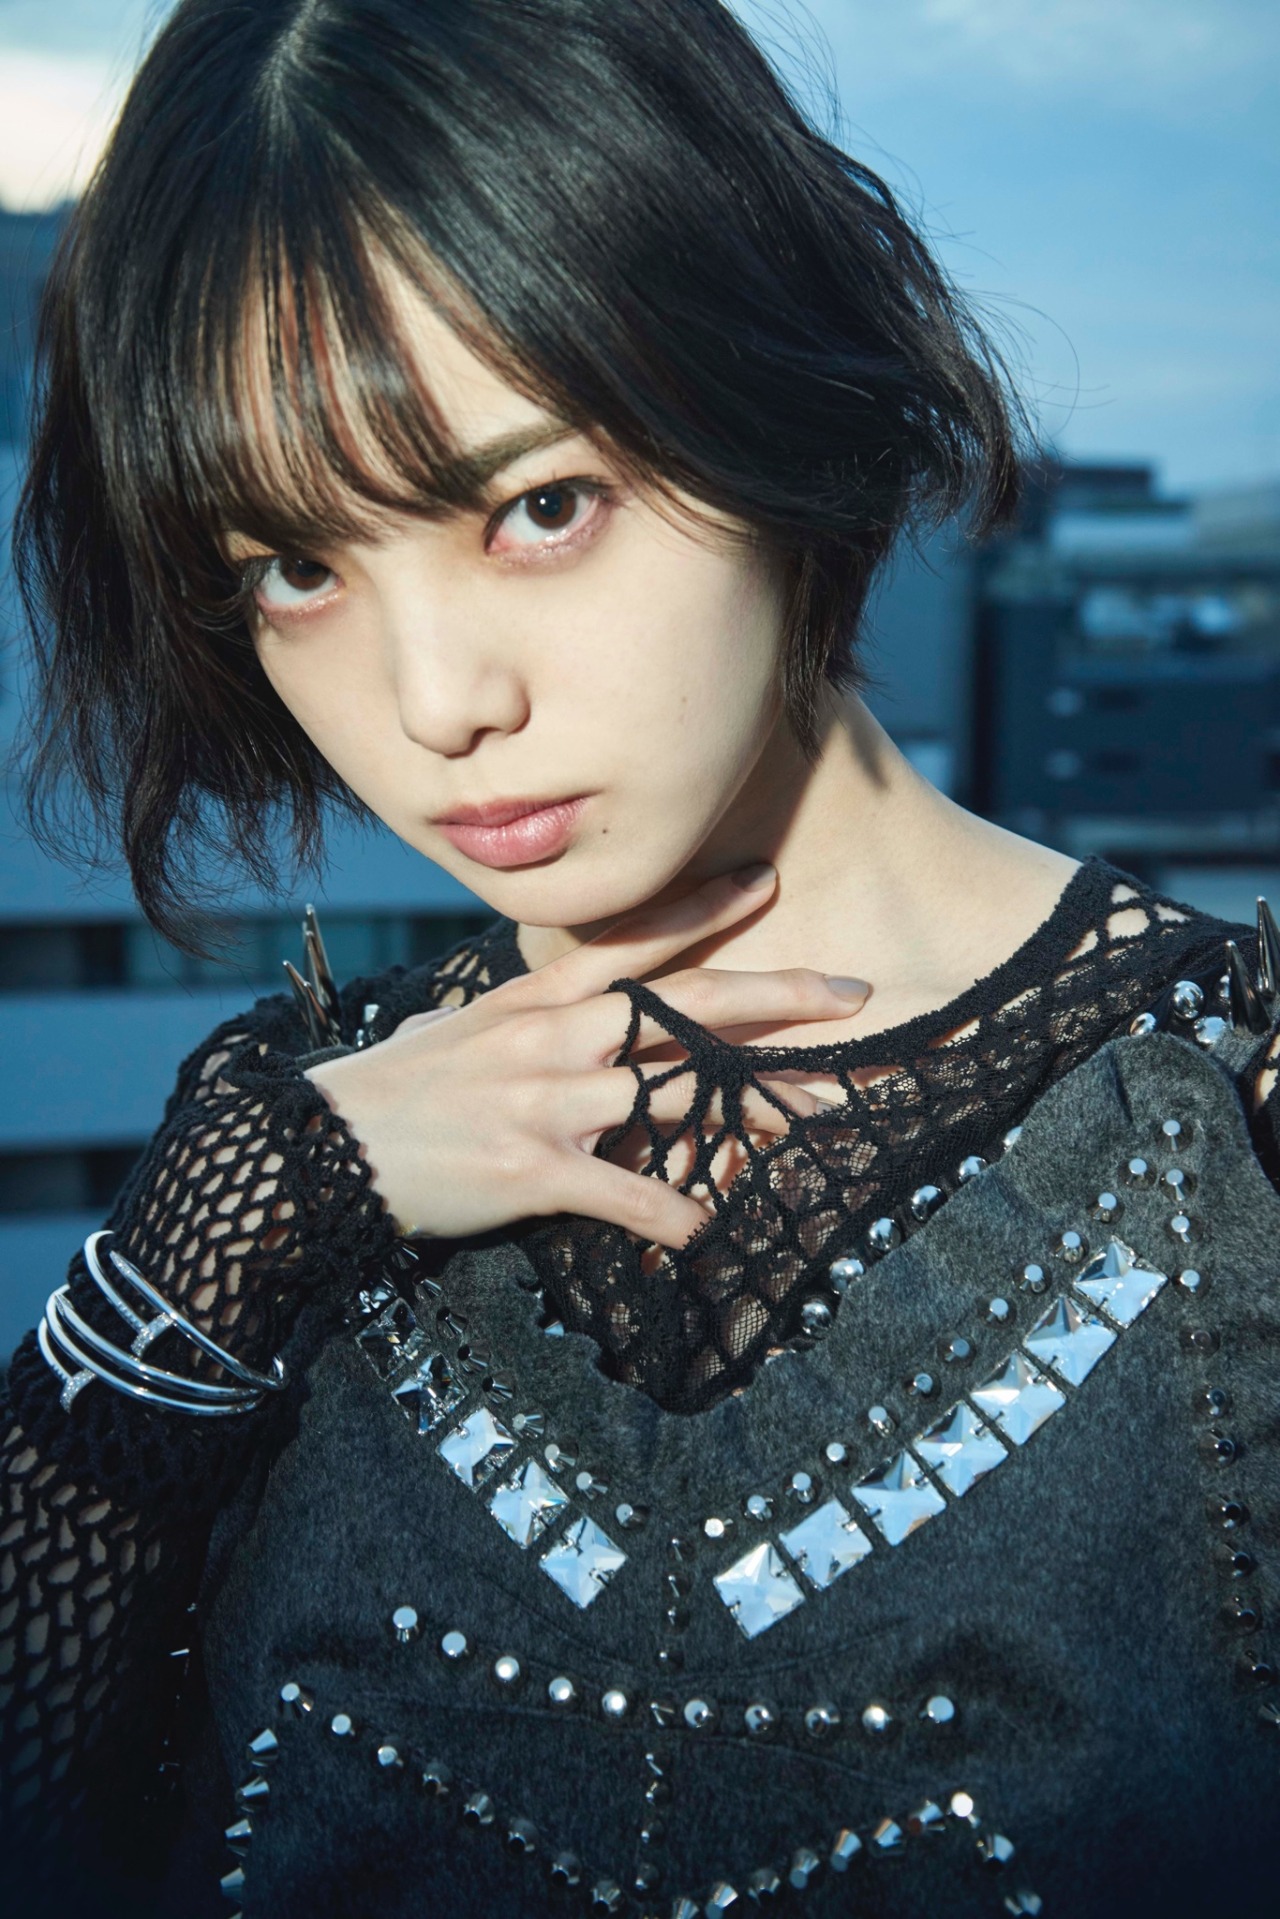 hirate-yurina:VOGUE GIRLhttps://voguegirl.jp/lifestyle/people/20210927/gom-interview-yurina-hirate/